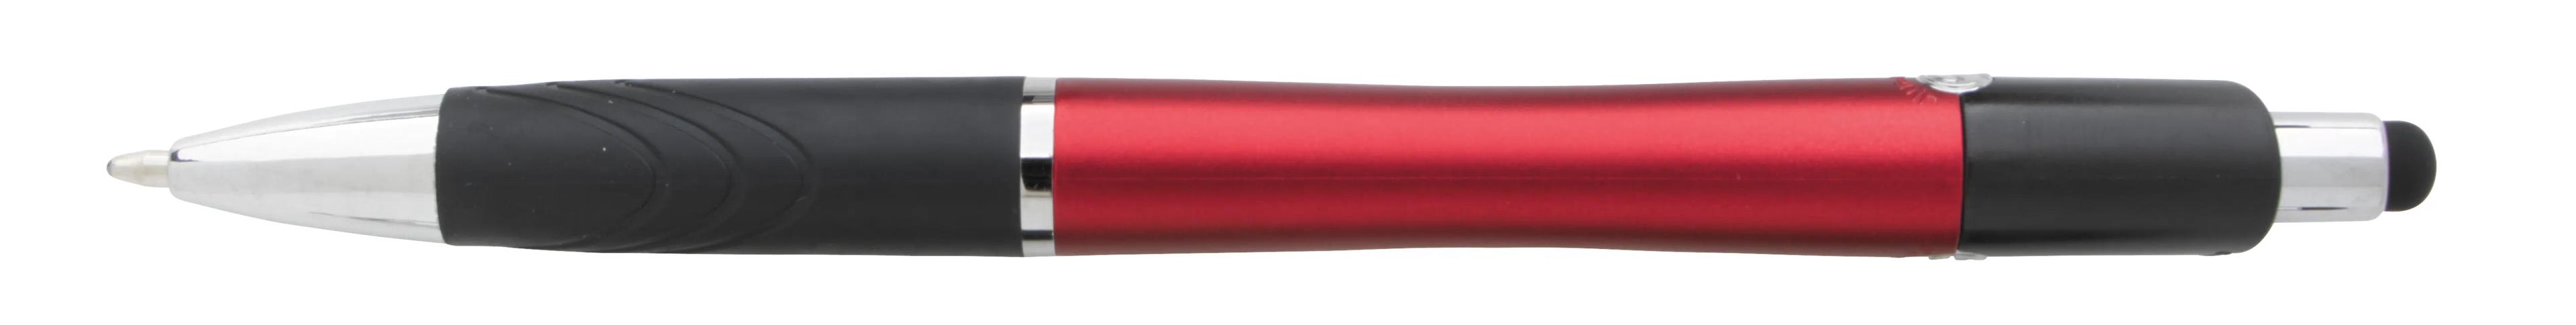 Souvenir® Emblem Stylus Pen 23 of 37